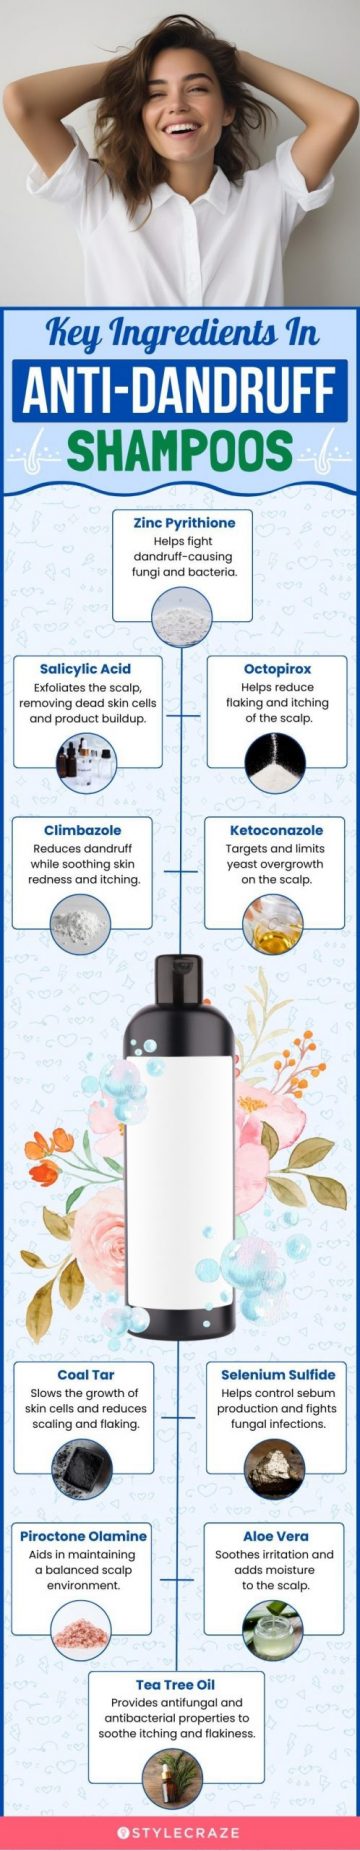 Key Ingredients In Anti-Dandruff Shampoos (infographic)